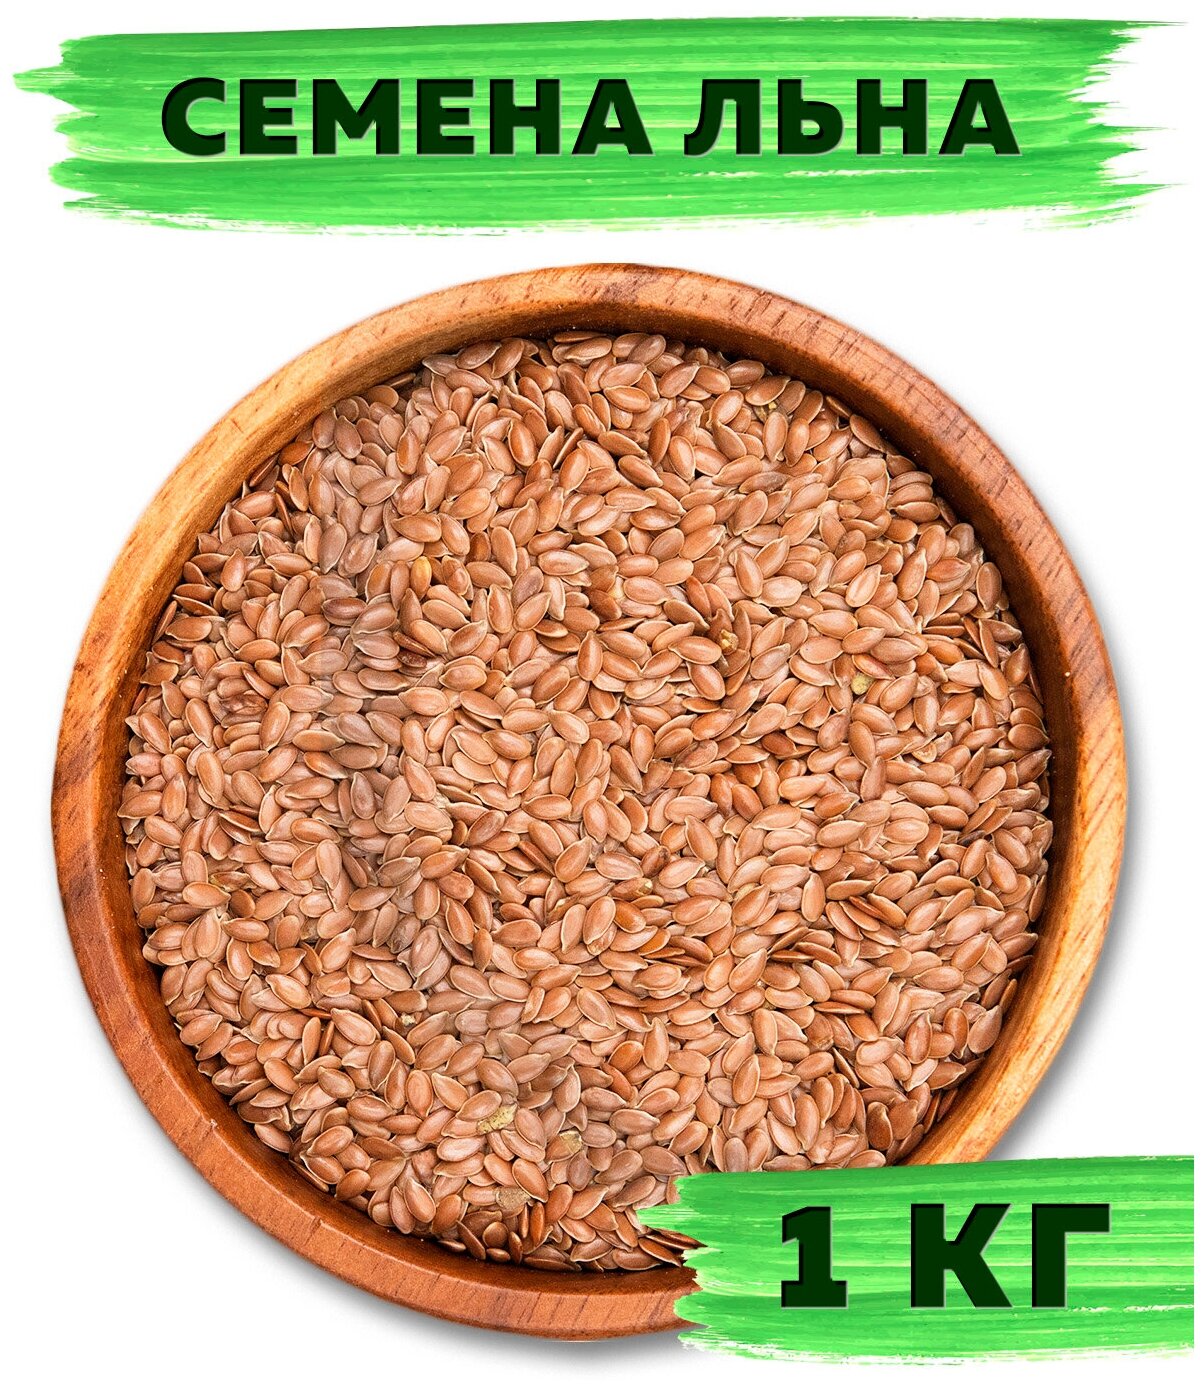 Семена Льна VegaGreen 1000 грамм / 1 кг